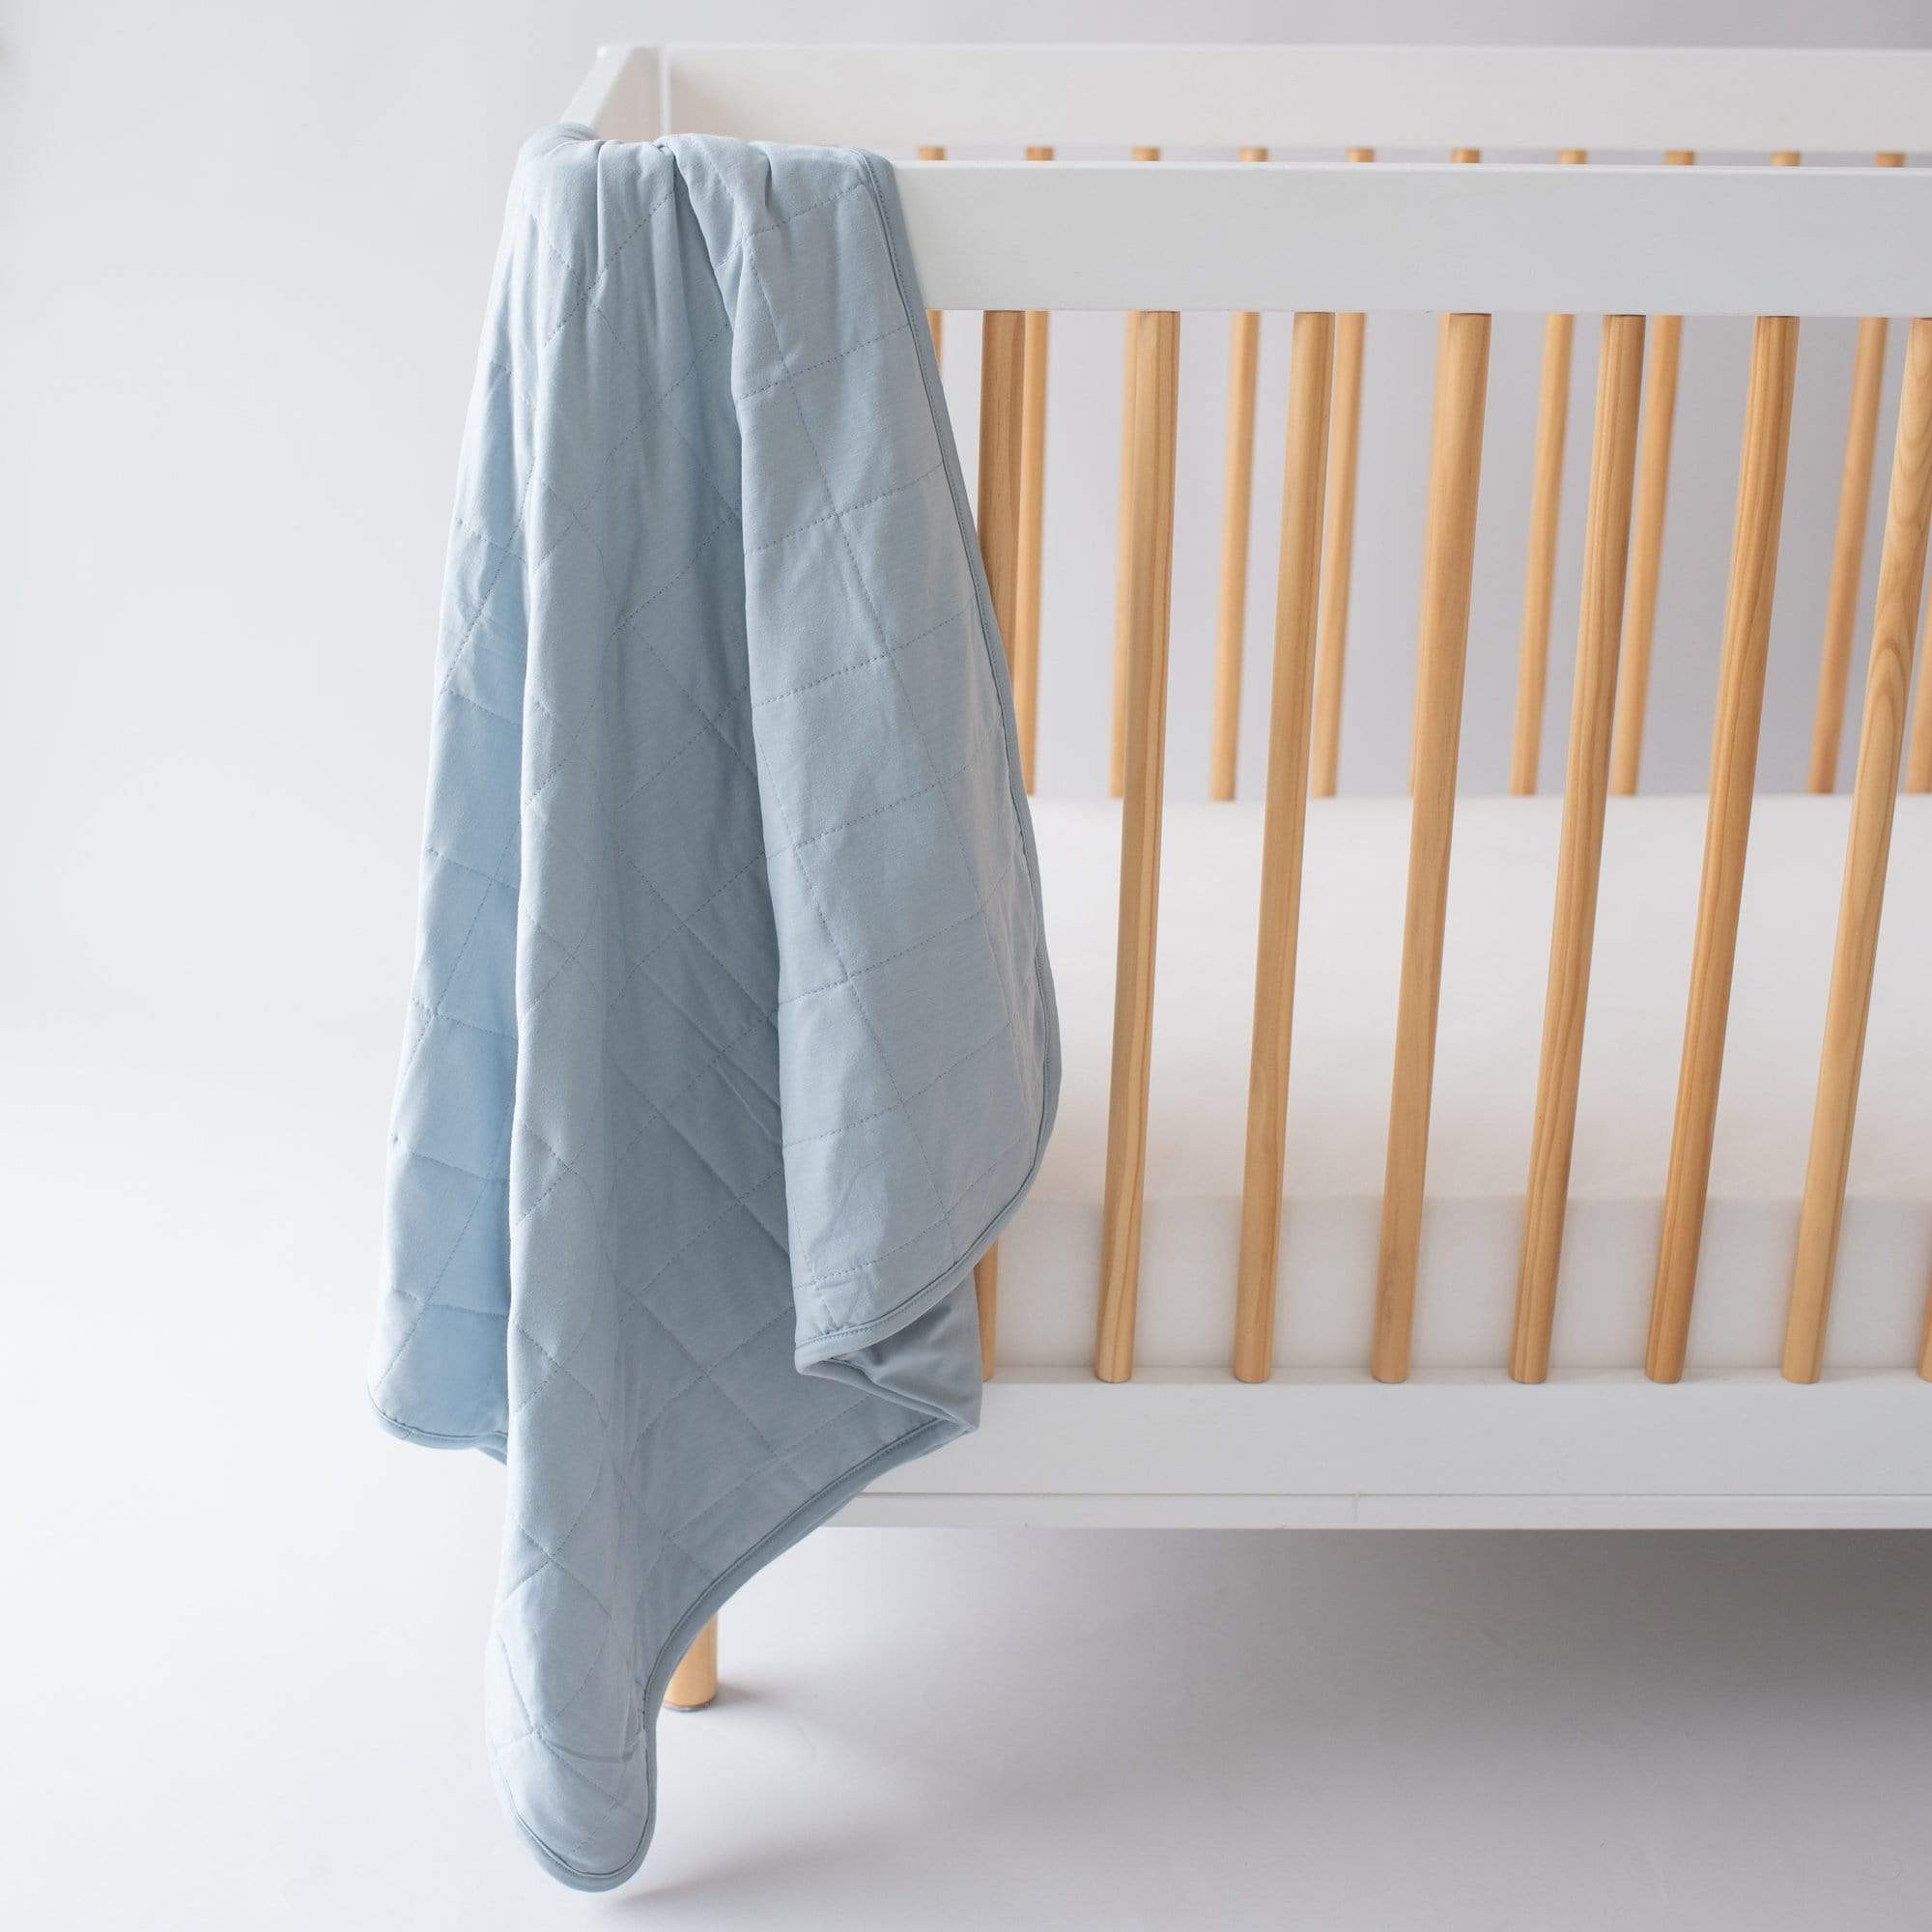 Kyte Baby Blanket in Fog Blue hanging on crib